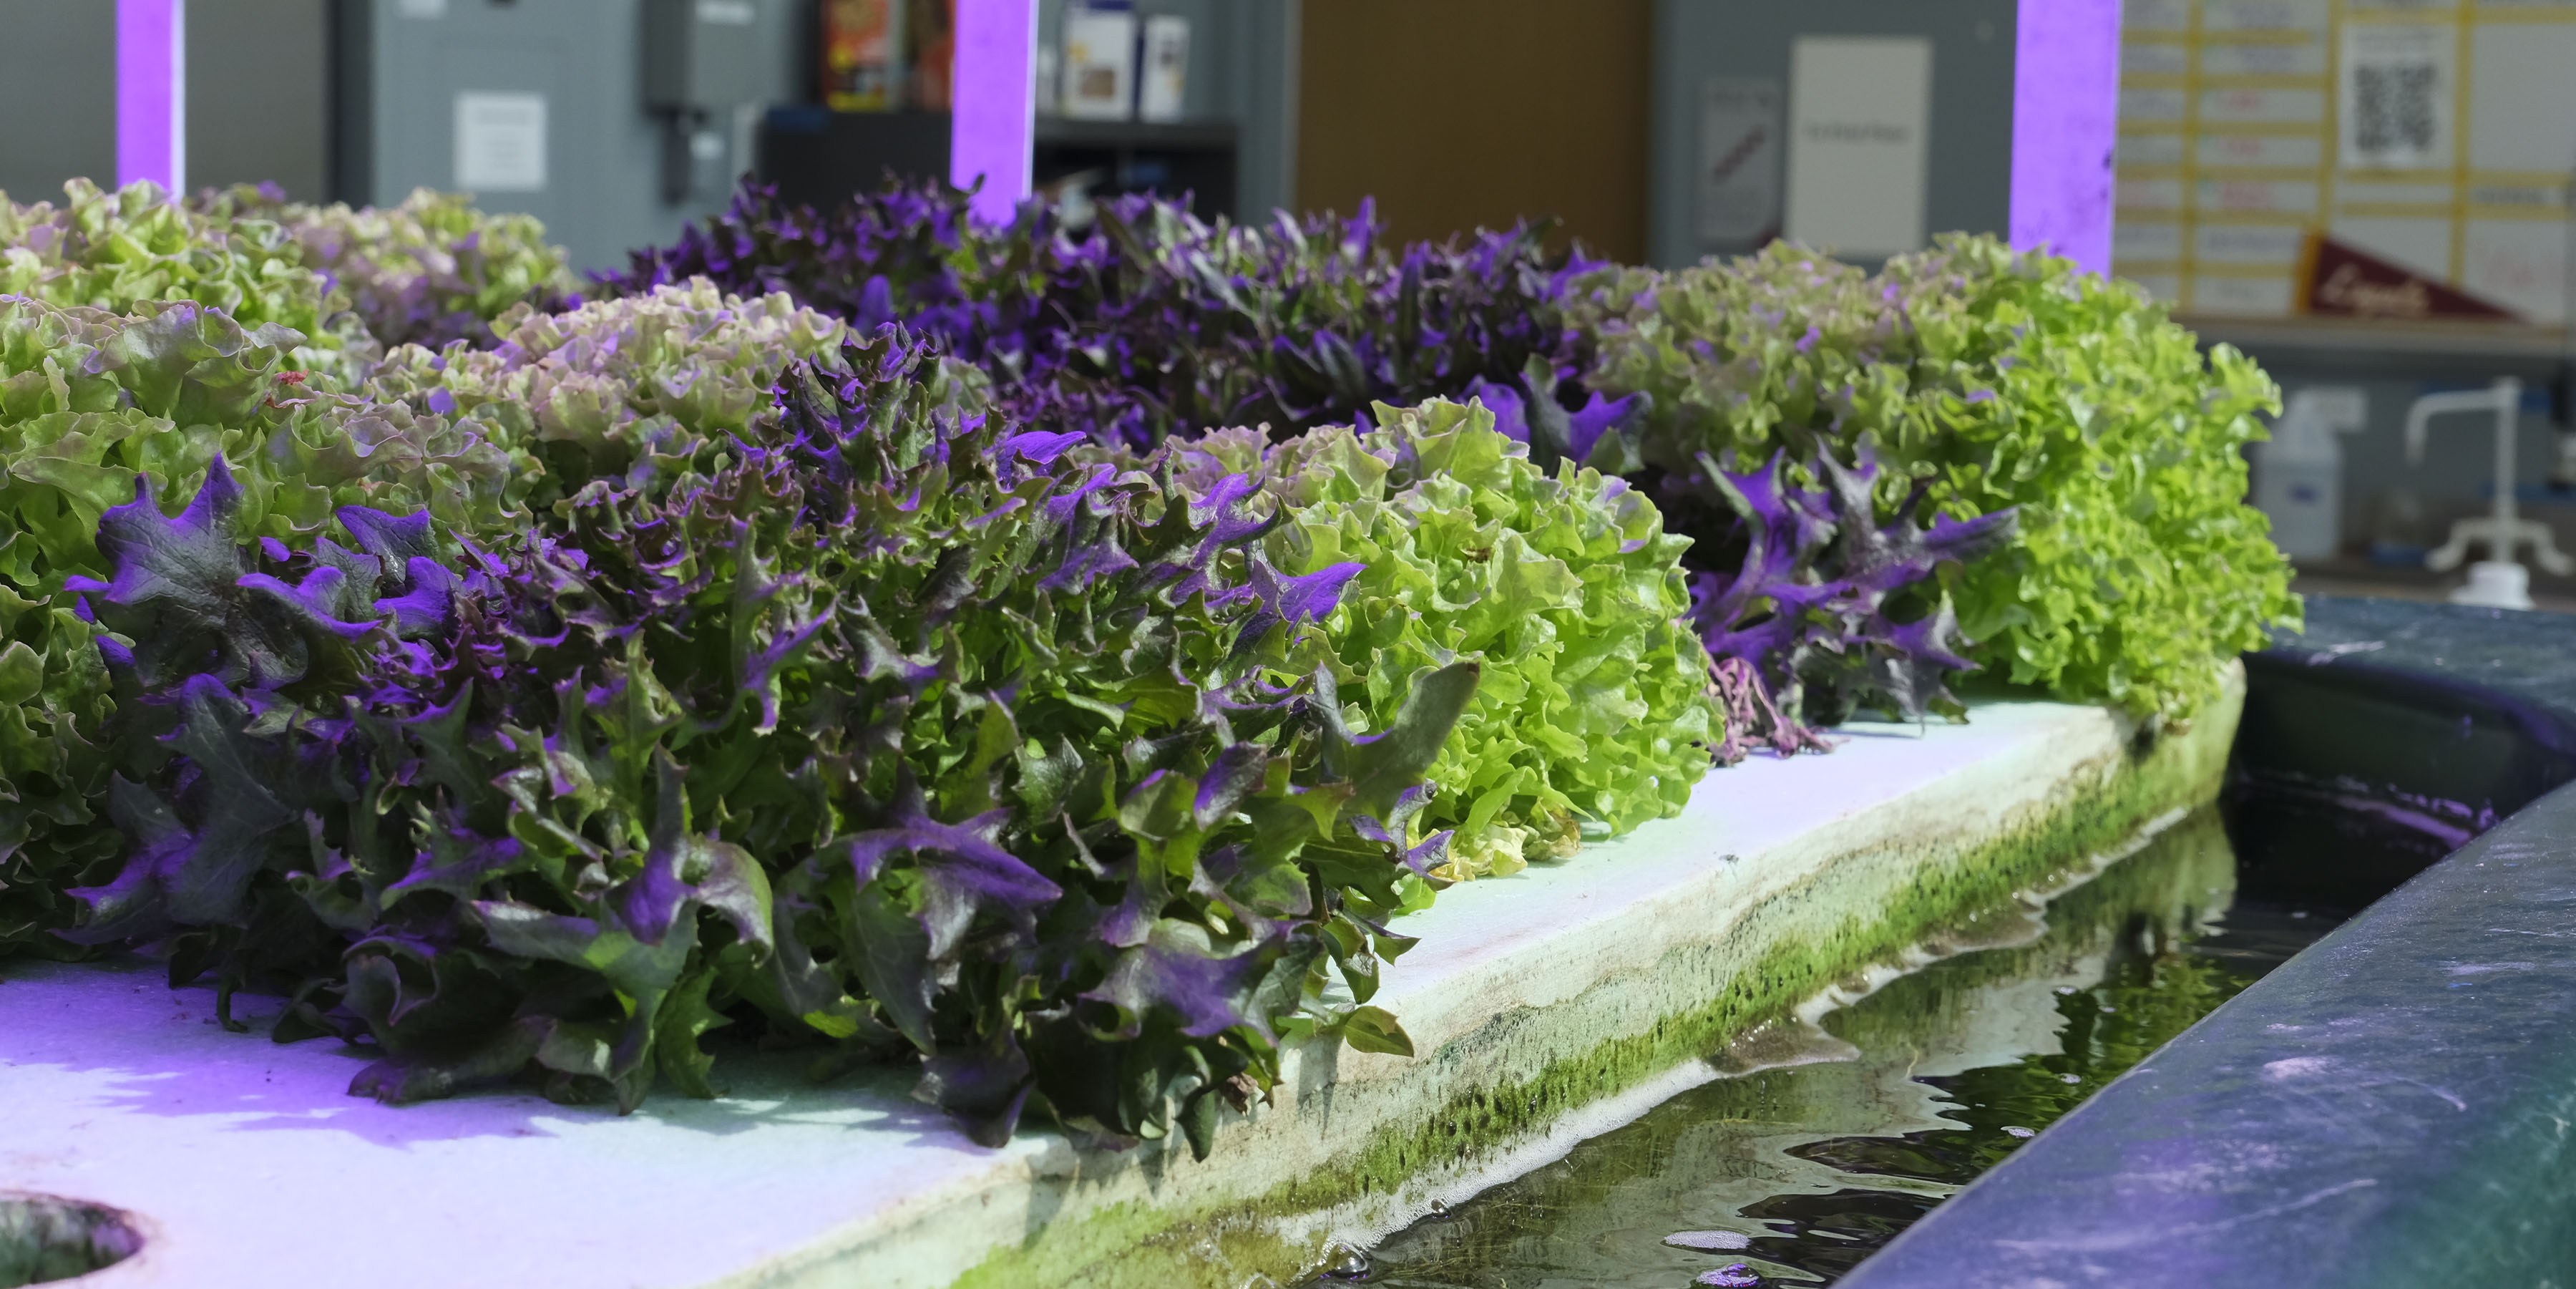 Aquaponics system growing lettuce